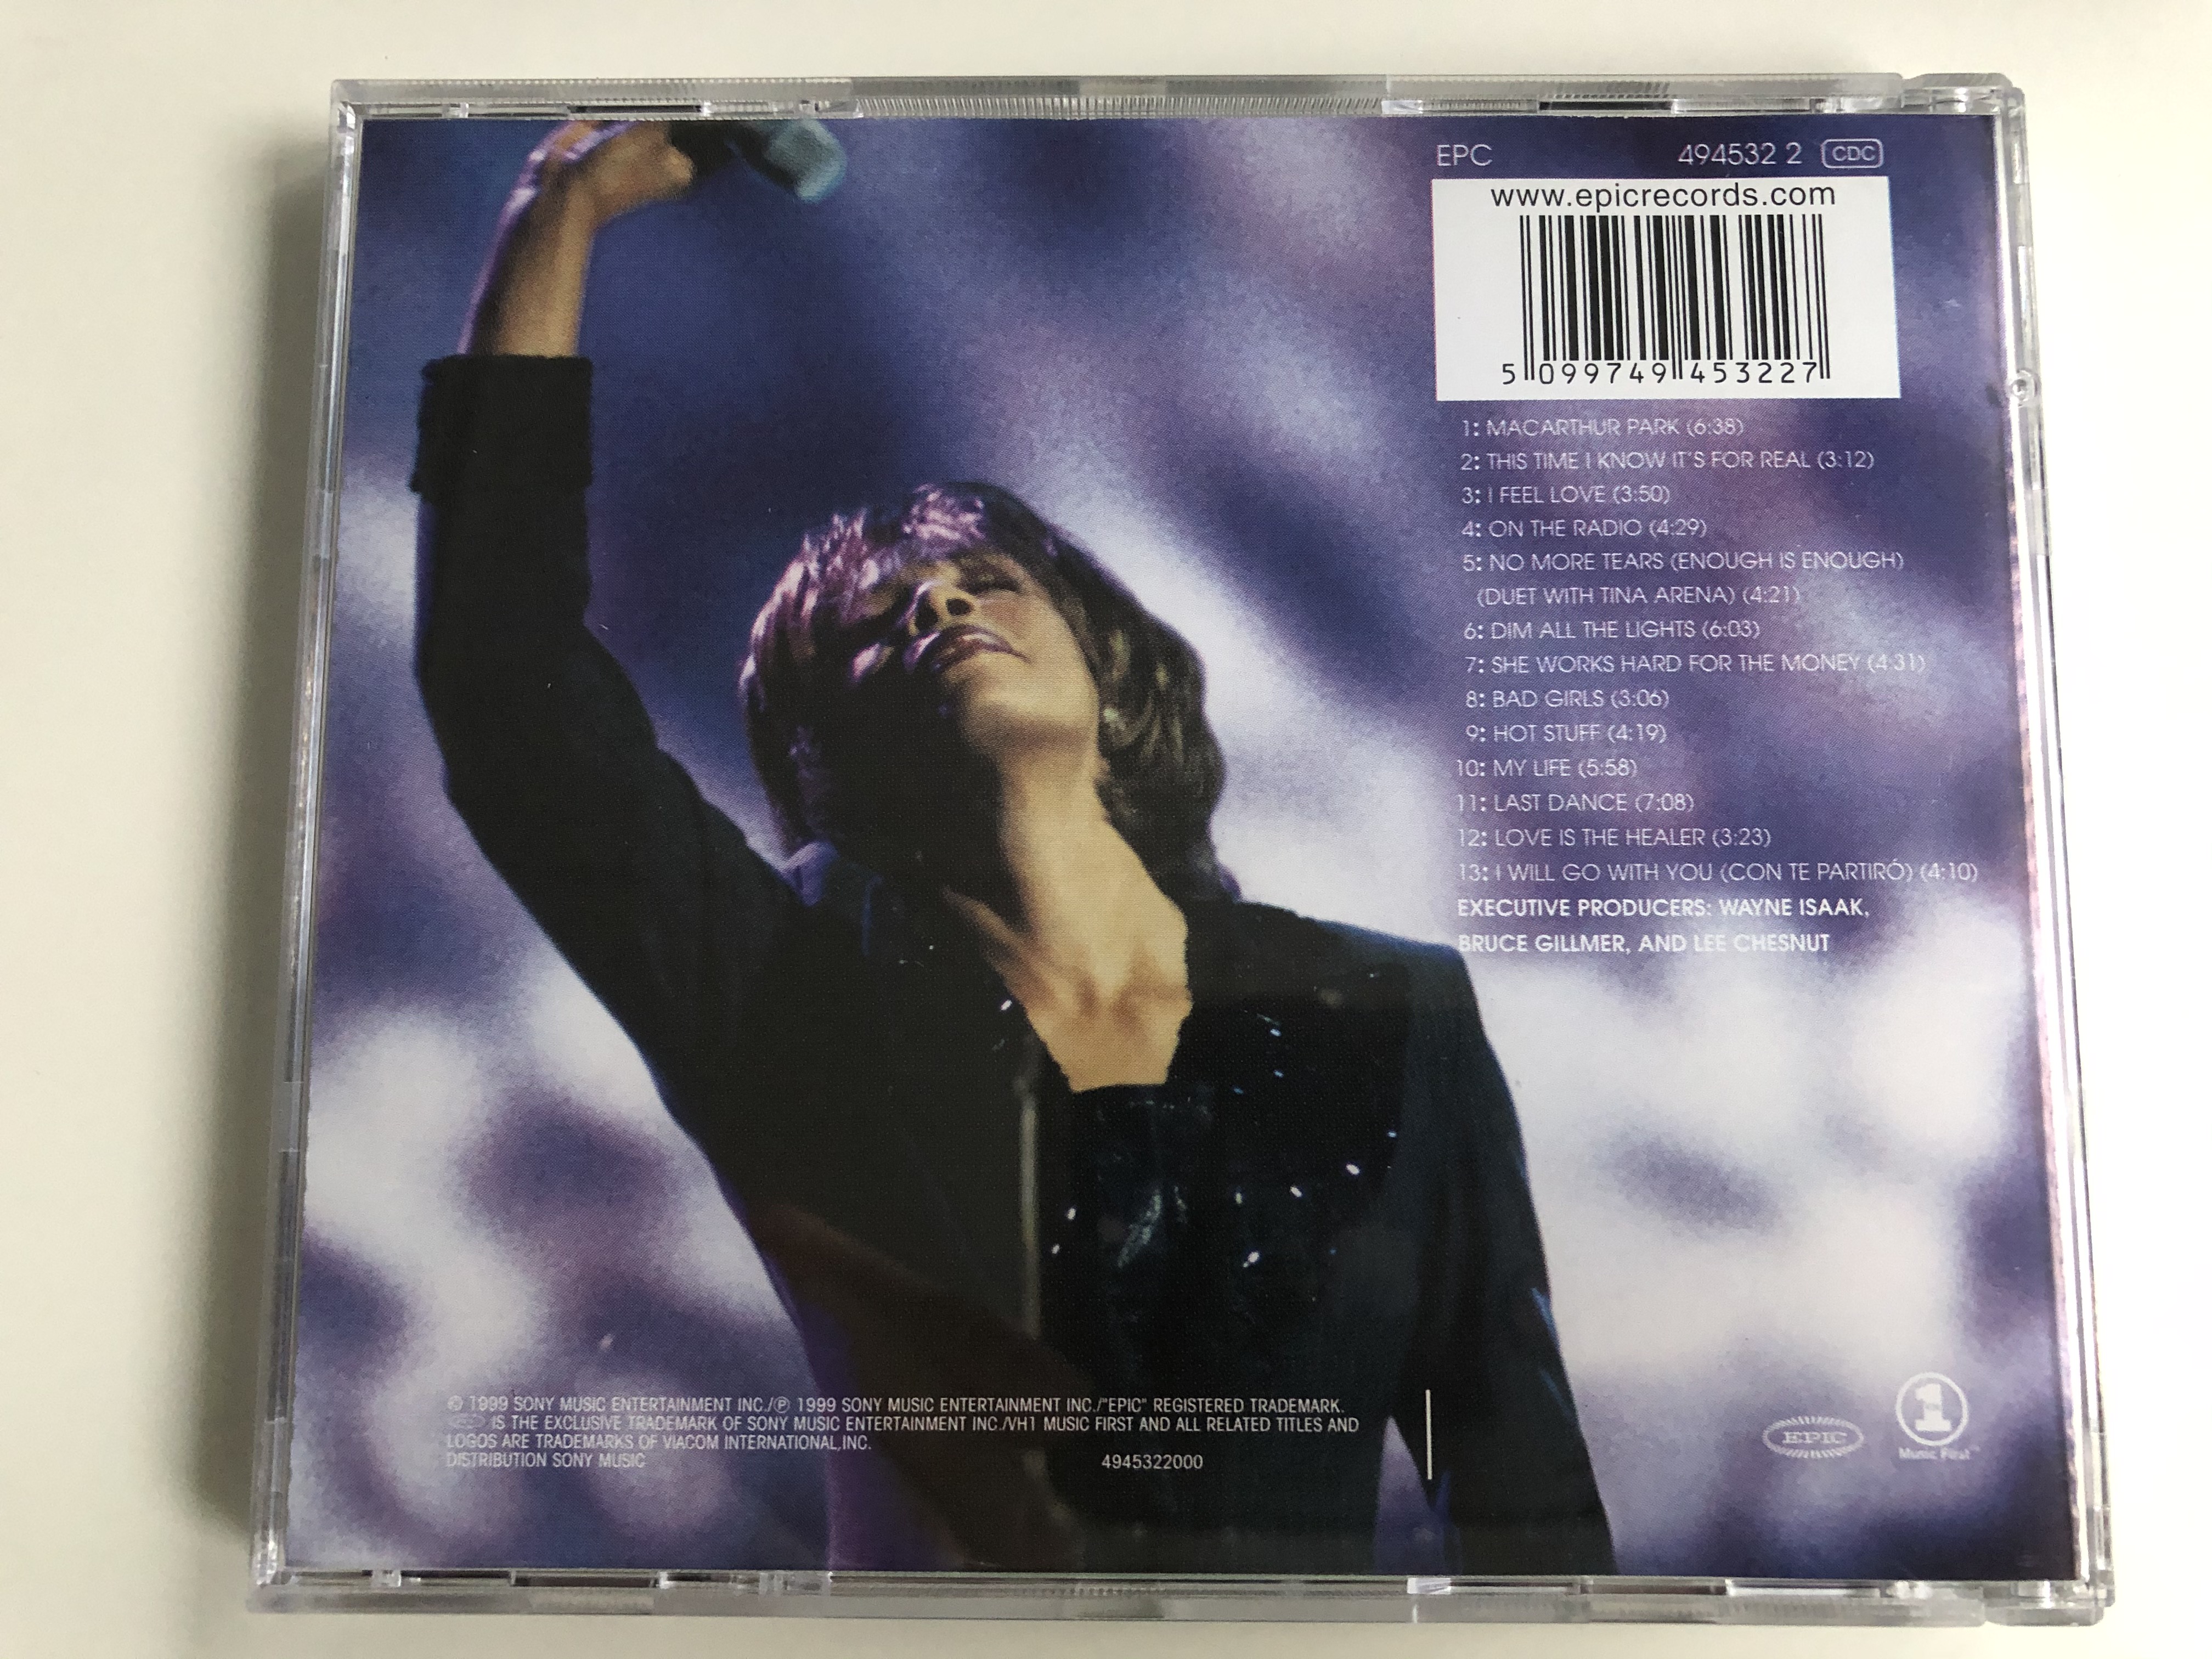 vh1-presents-live-more-encore-donna-summer-epic-audio-cd-1999-epc-494532-2-7-.jpg